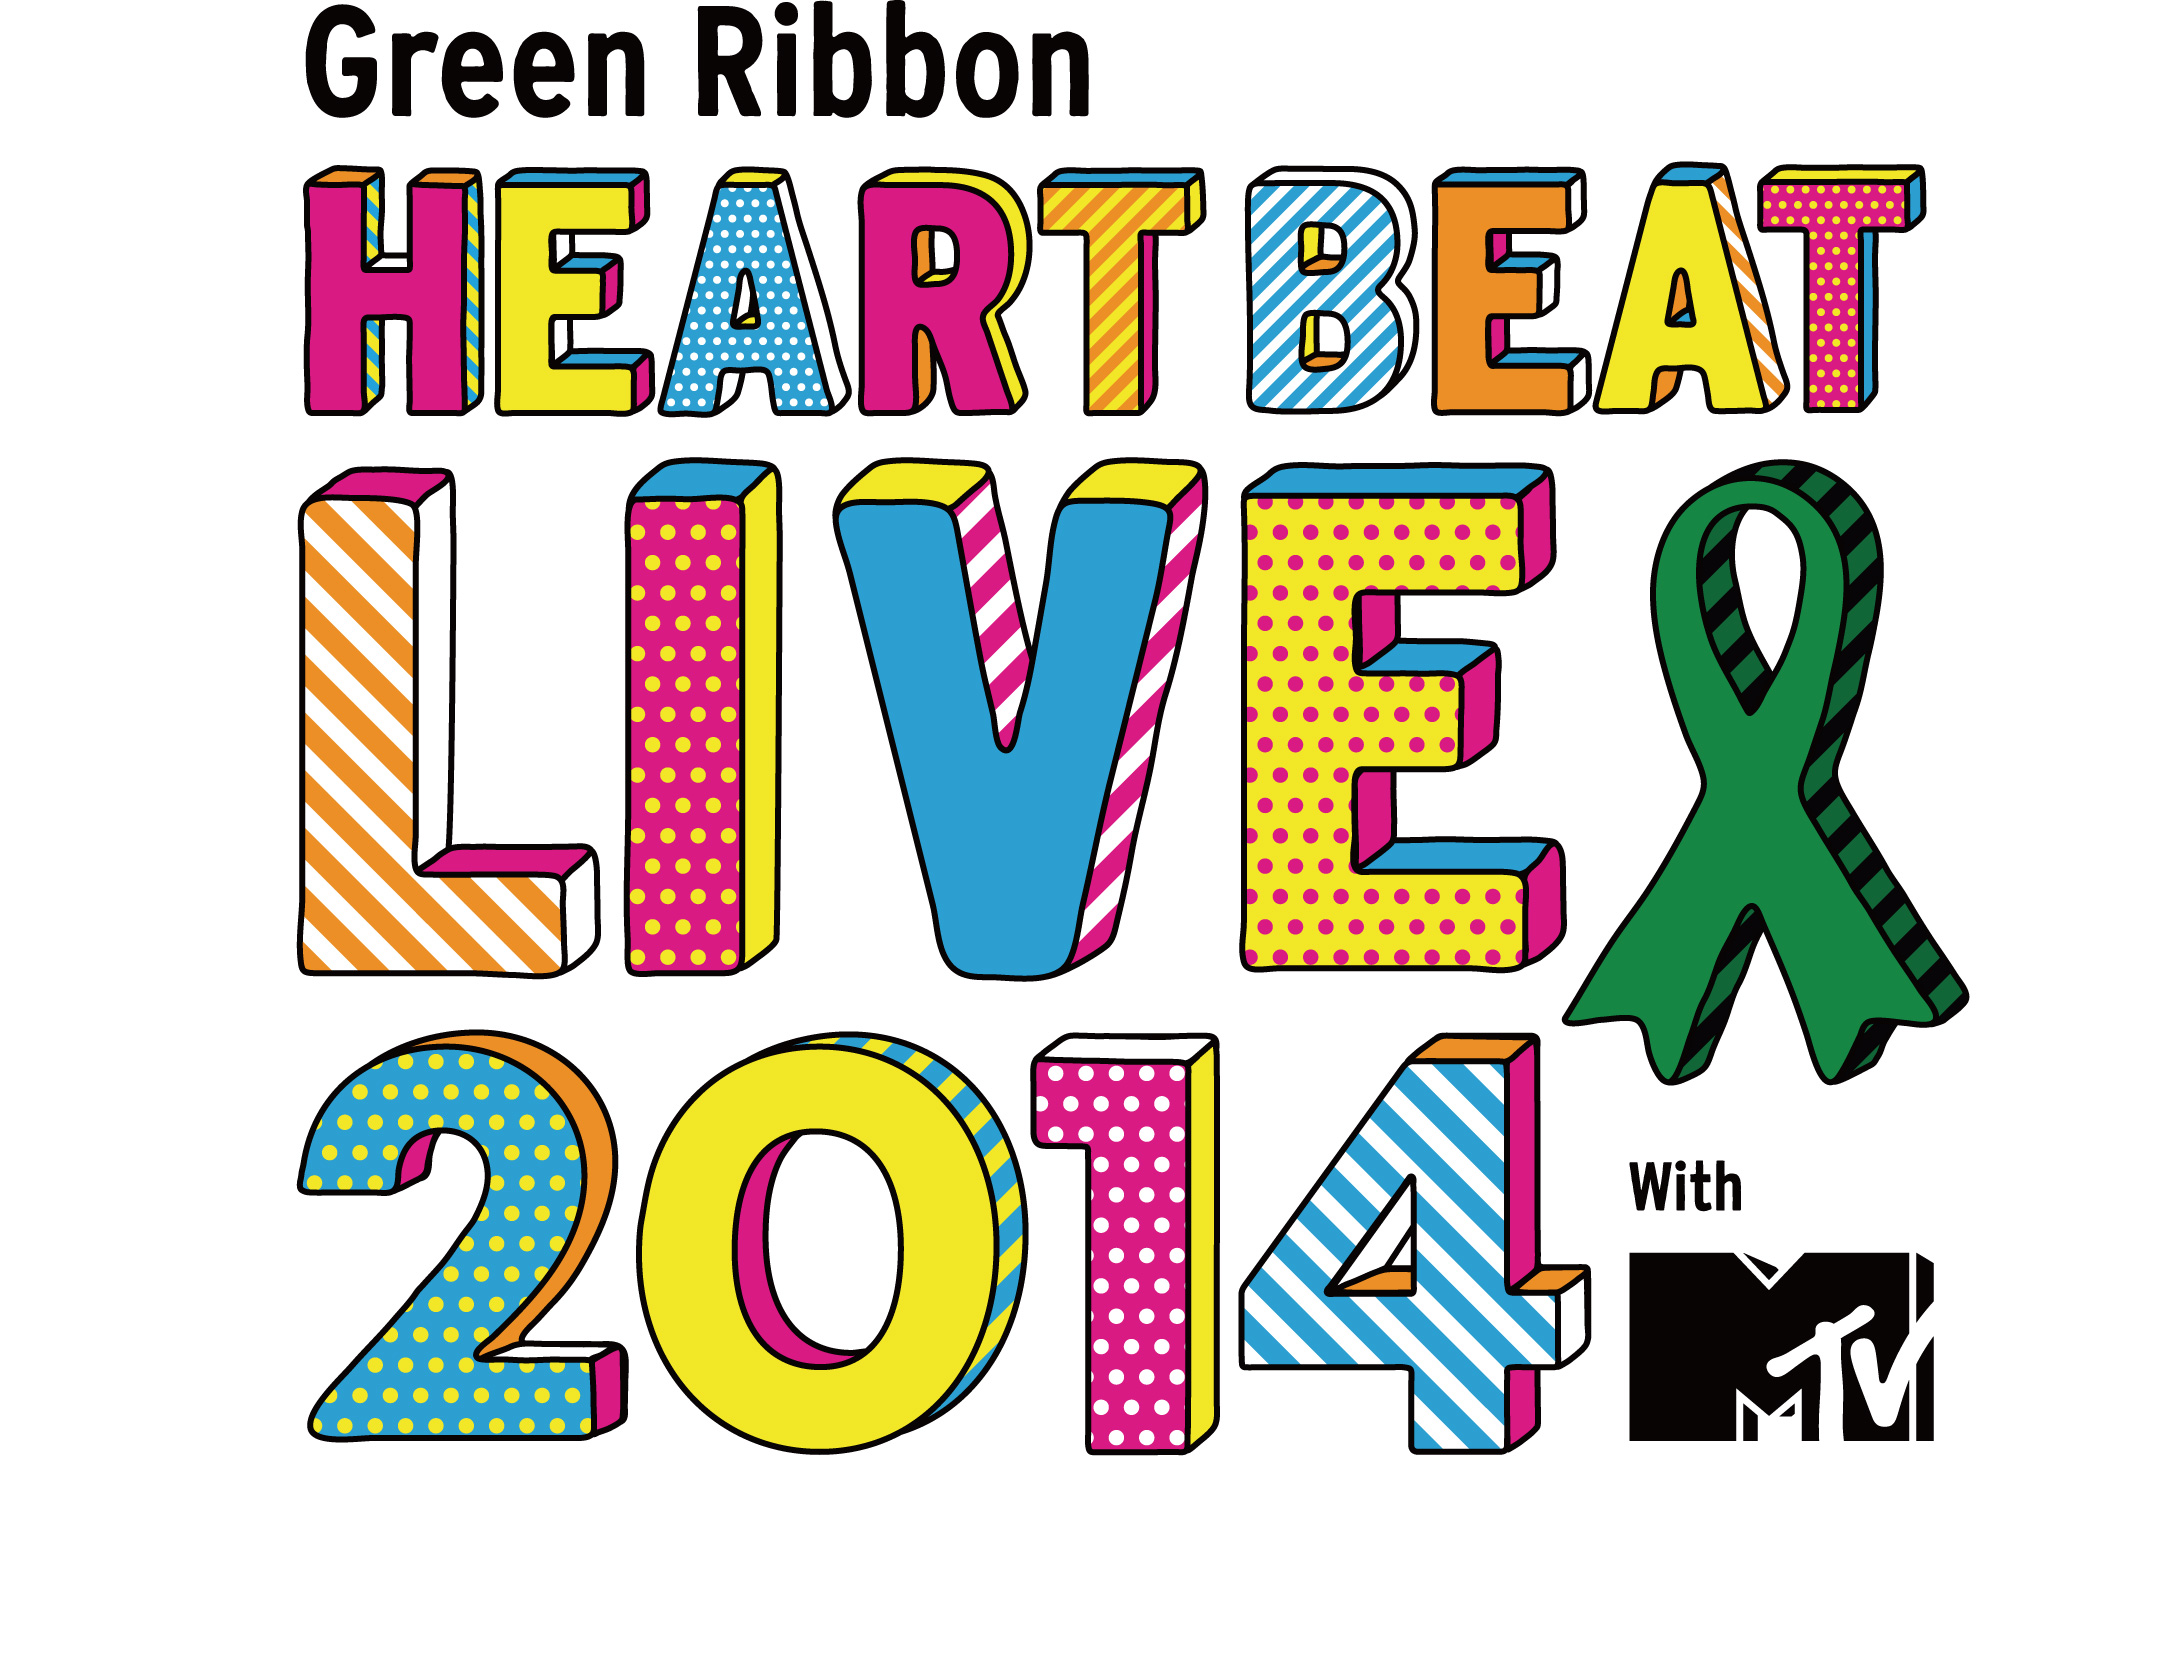 Green Ribbon Heart Beat Live 14 With Mtv 今年も開催決定 Mtv Networks Japan株式会社のプレスリリース